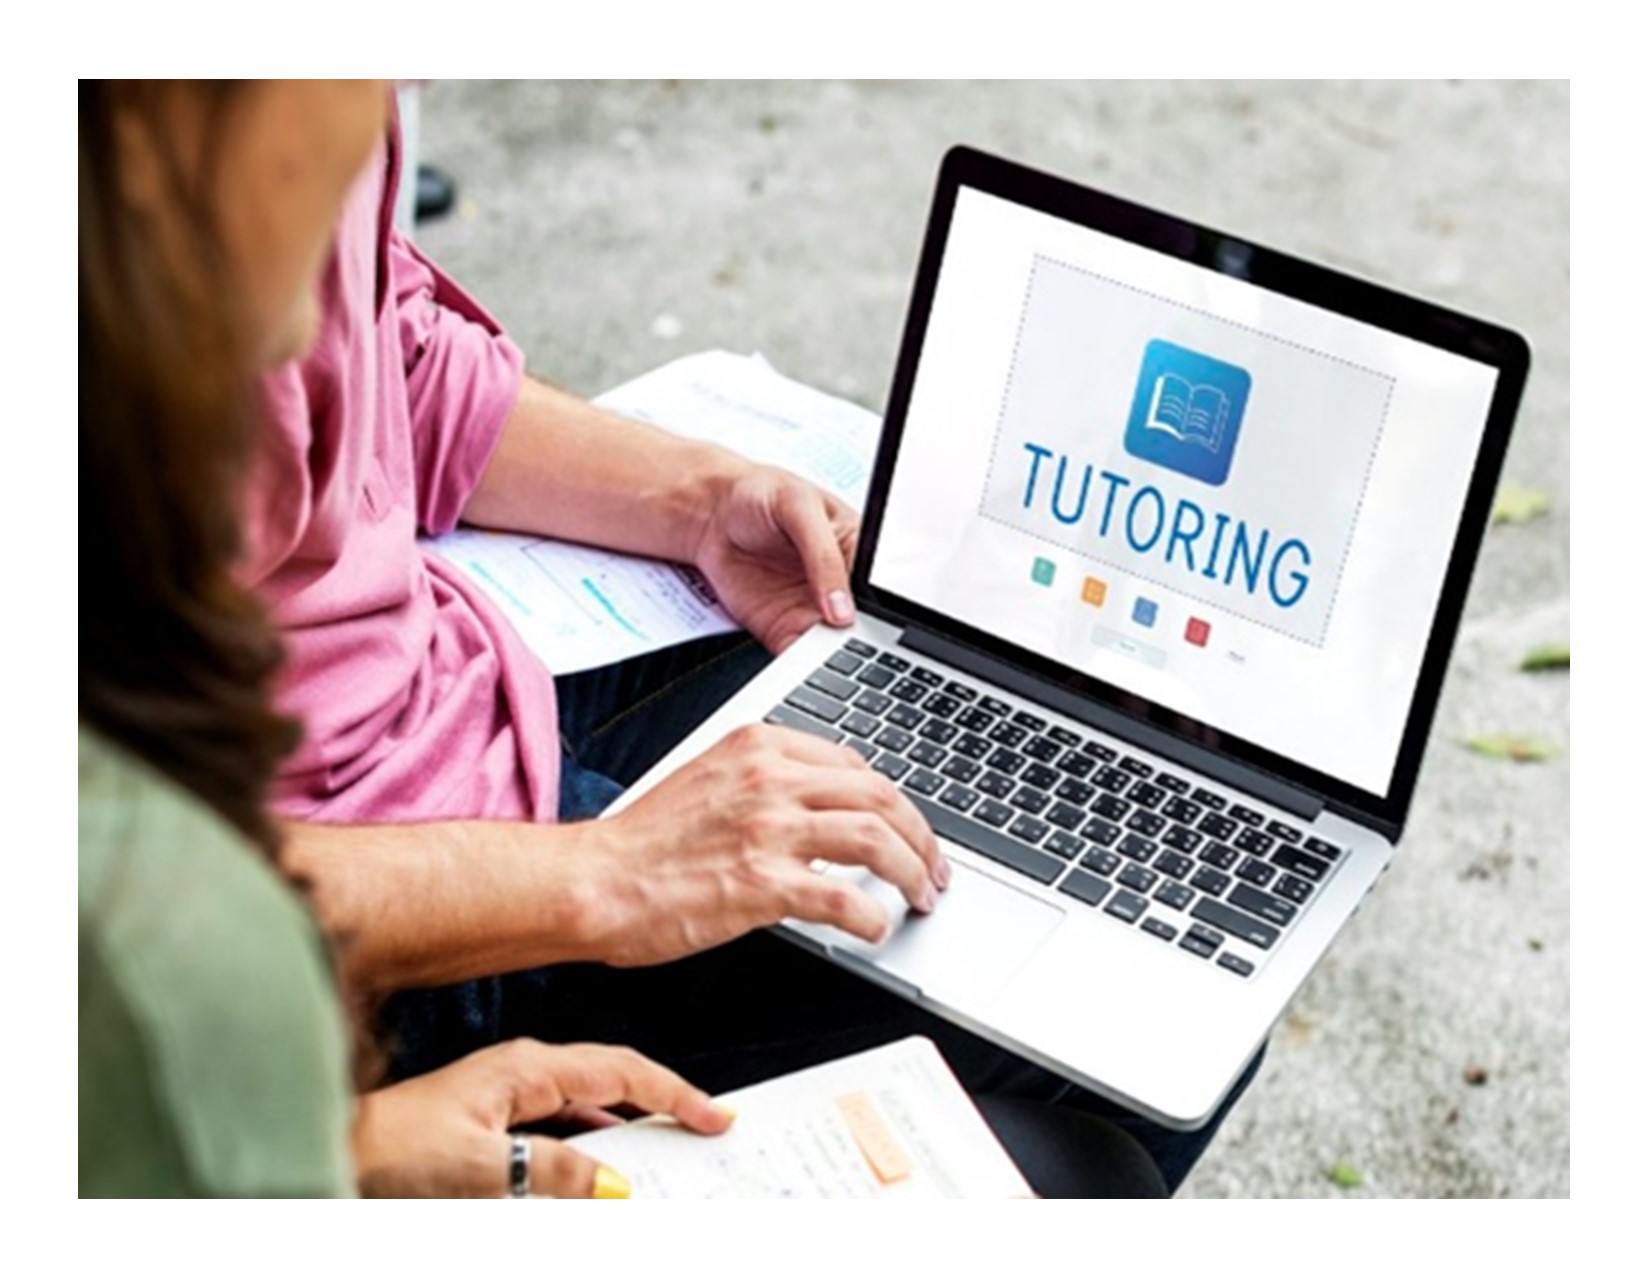 people tutoring on a laptop